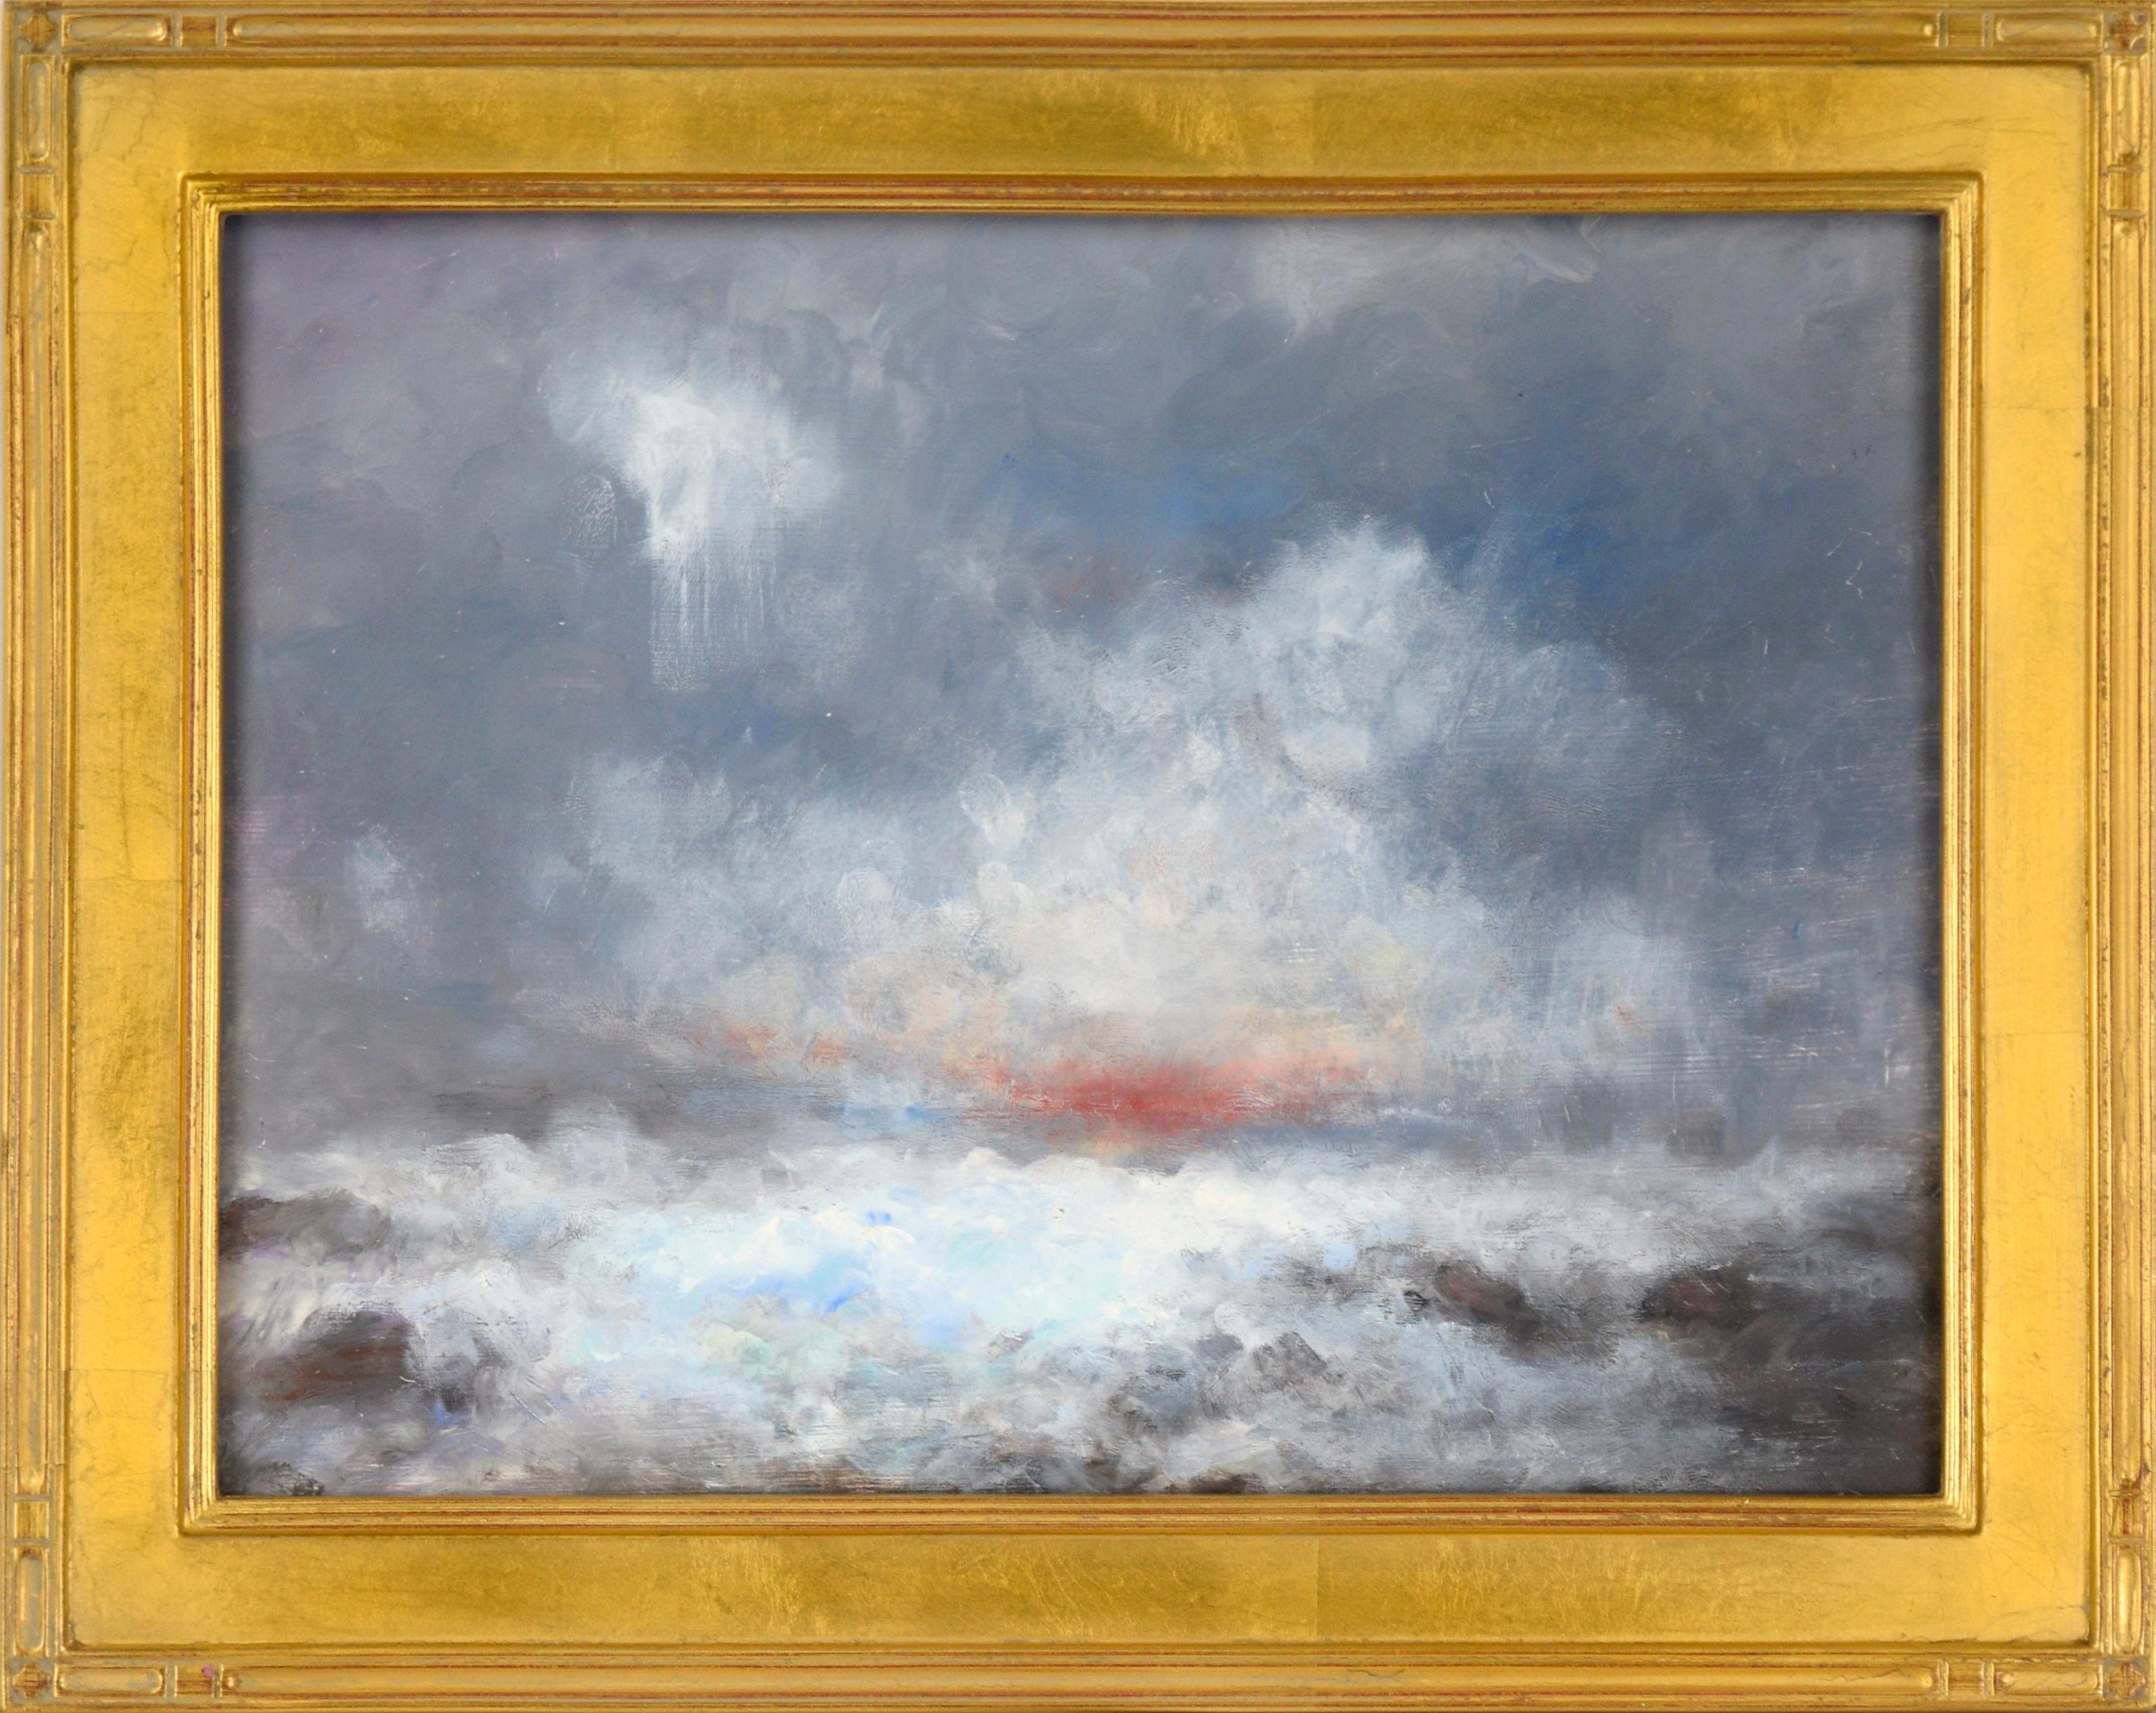 Vasil Papkov Landscape Painting - Storm Approaching Over the Sea - Seascape